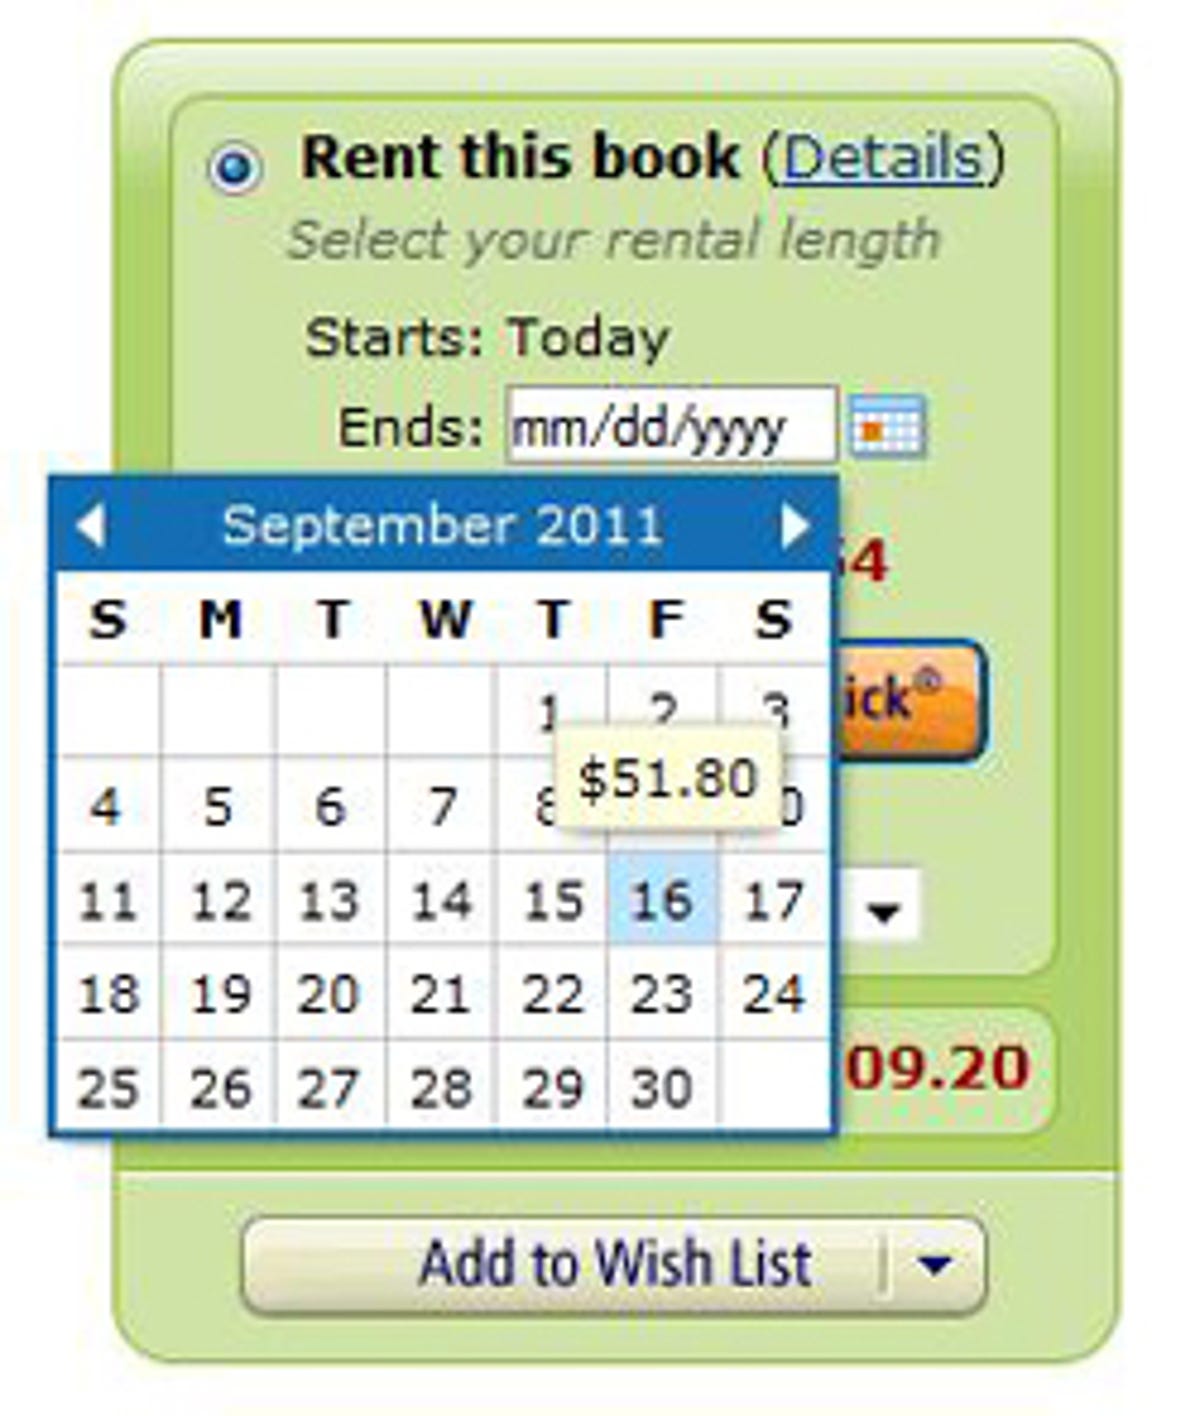 Amazon's Kindle textbook rental option